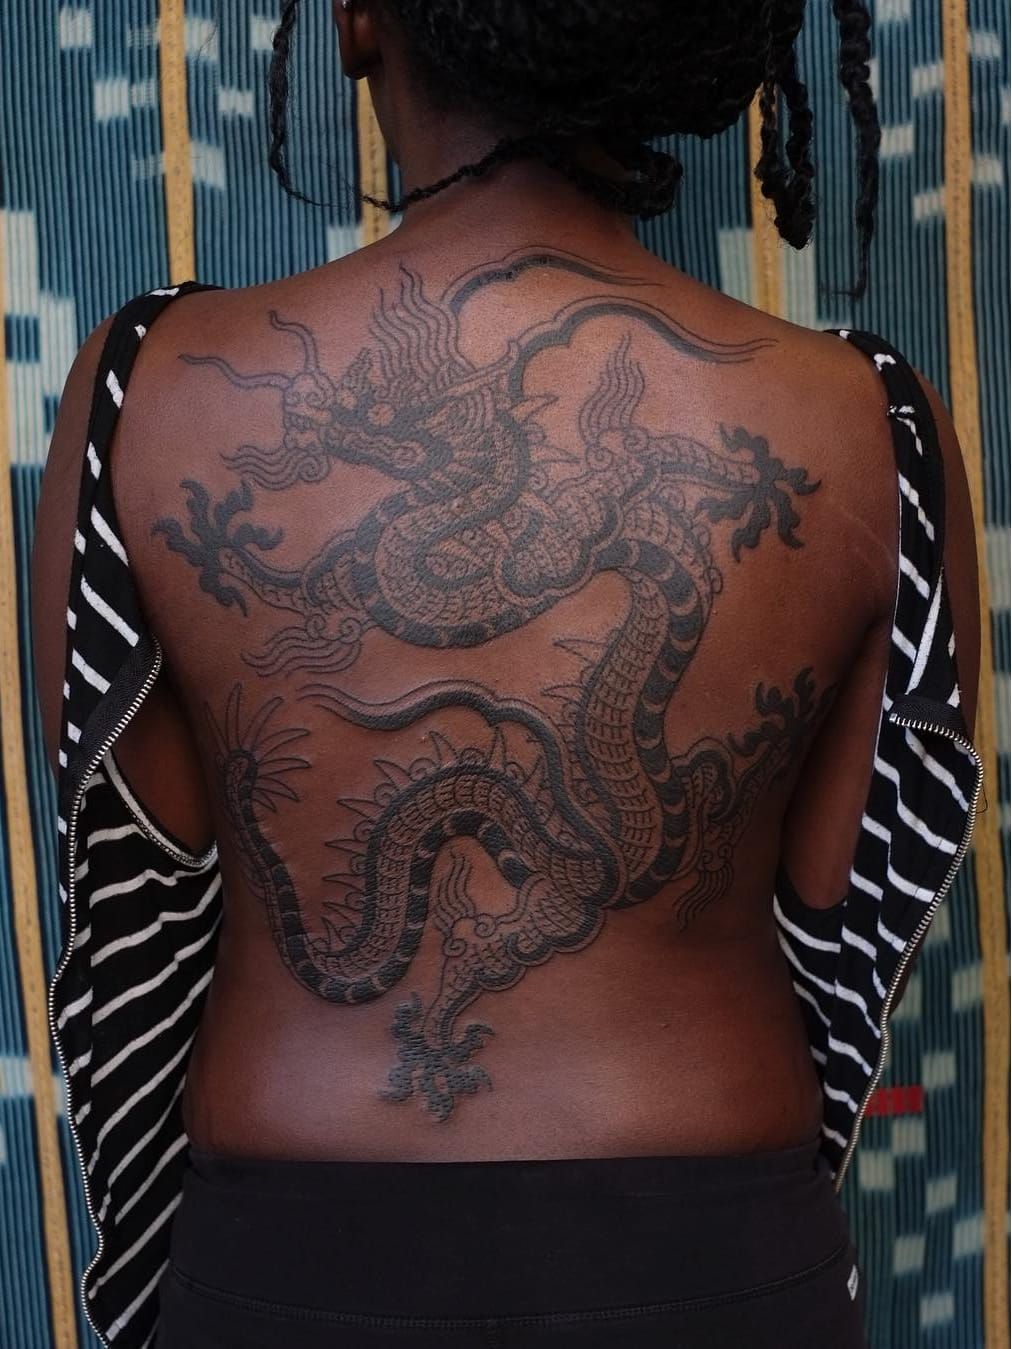 jormungandr in Tattoos  Search in 13M Tattoos Now  Tattoodo